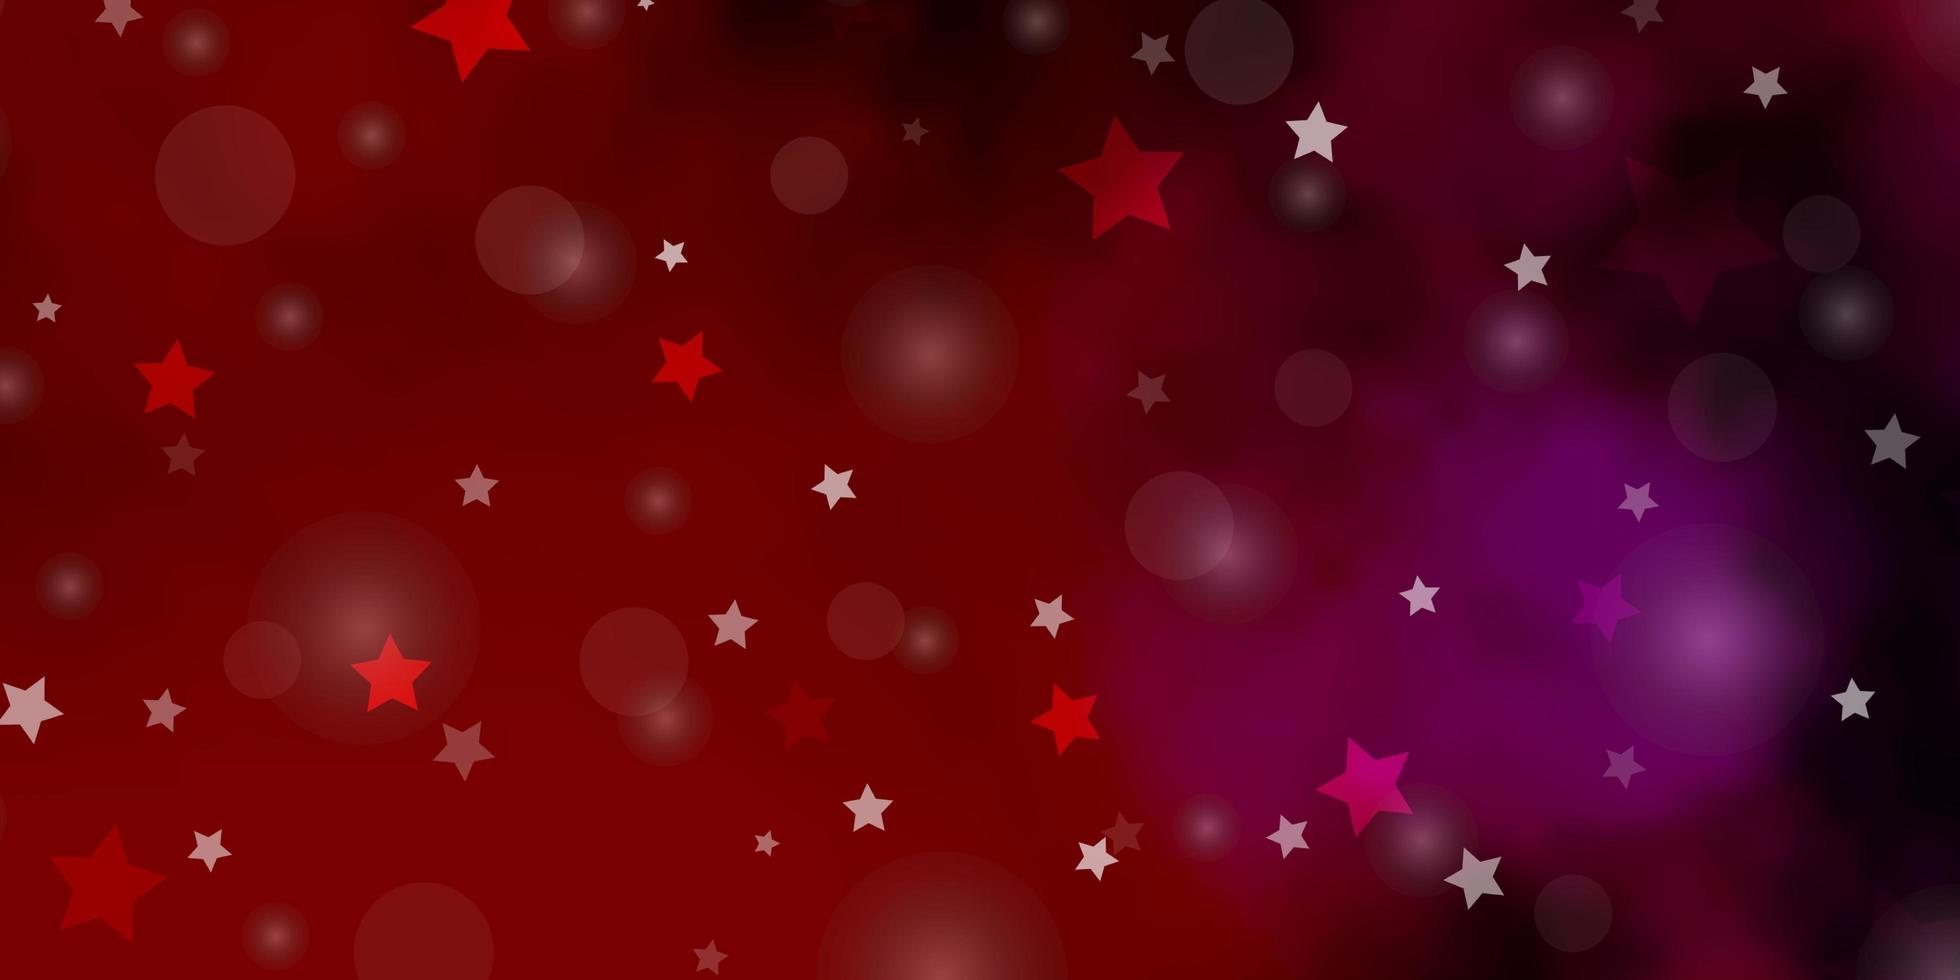 fundo vector rosa roxo escuro com círculos estrelas discos coloridos estrelas em modelo de fundo gradiente simples para sites de cartões de visita